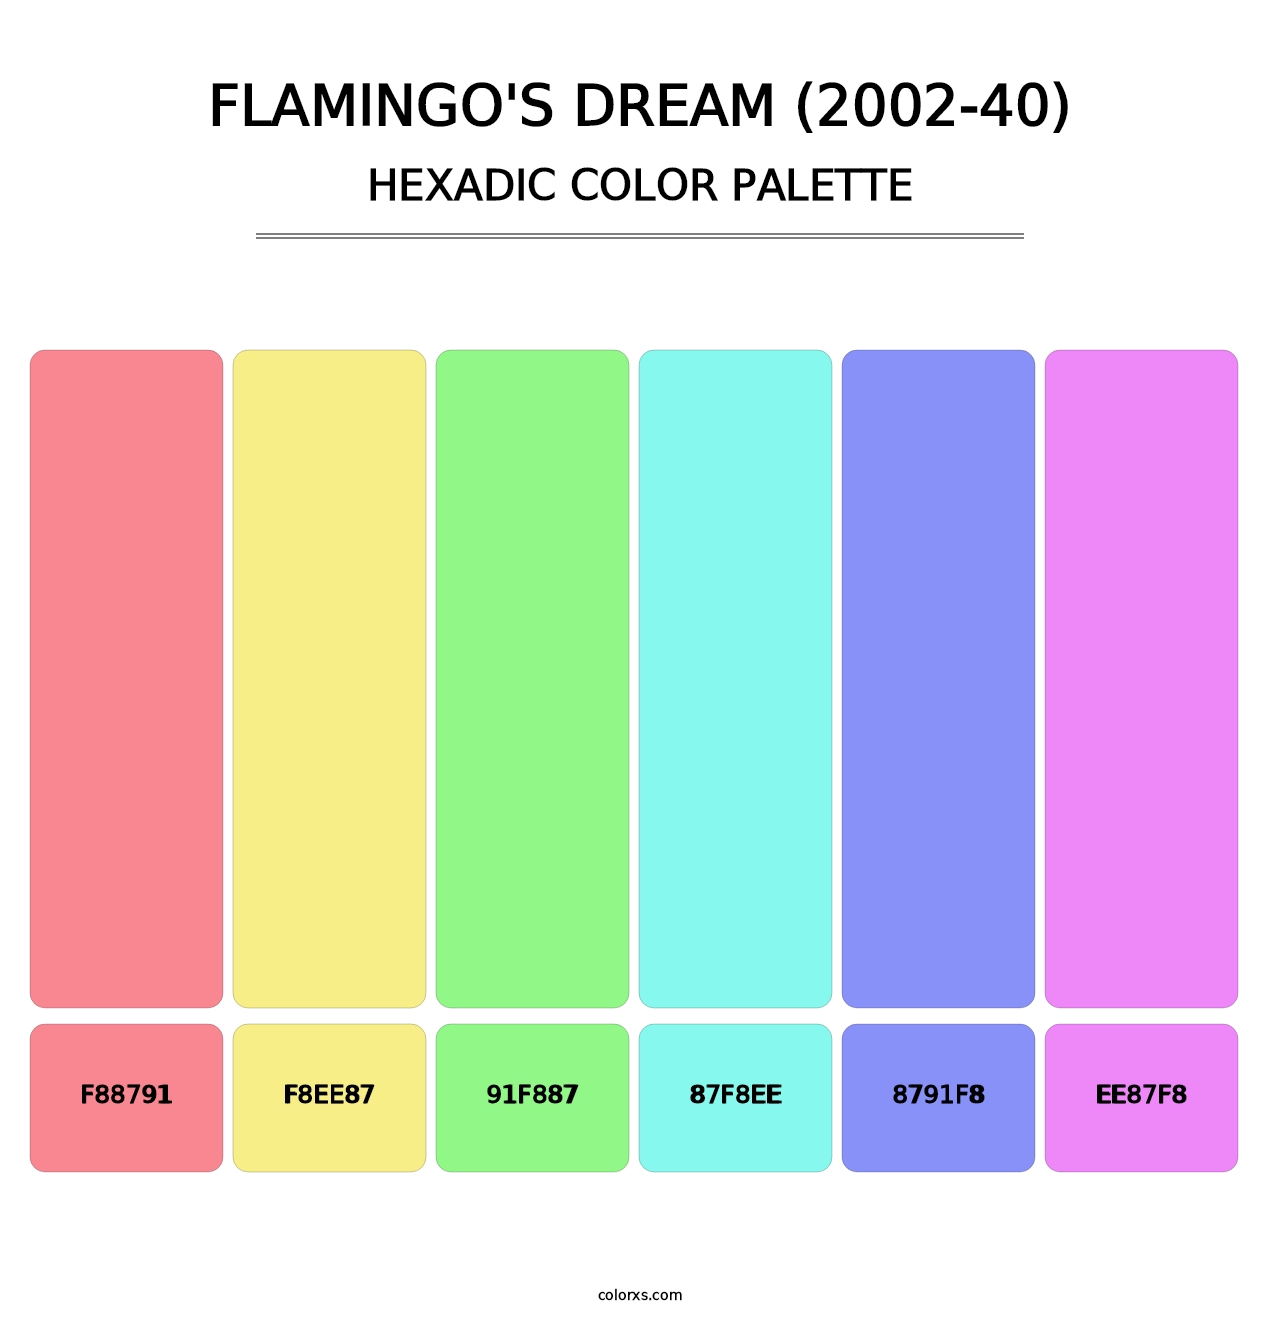 Flamingo's Dream (2002-40) - Hexadic Color Palette